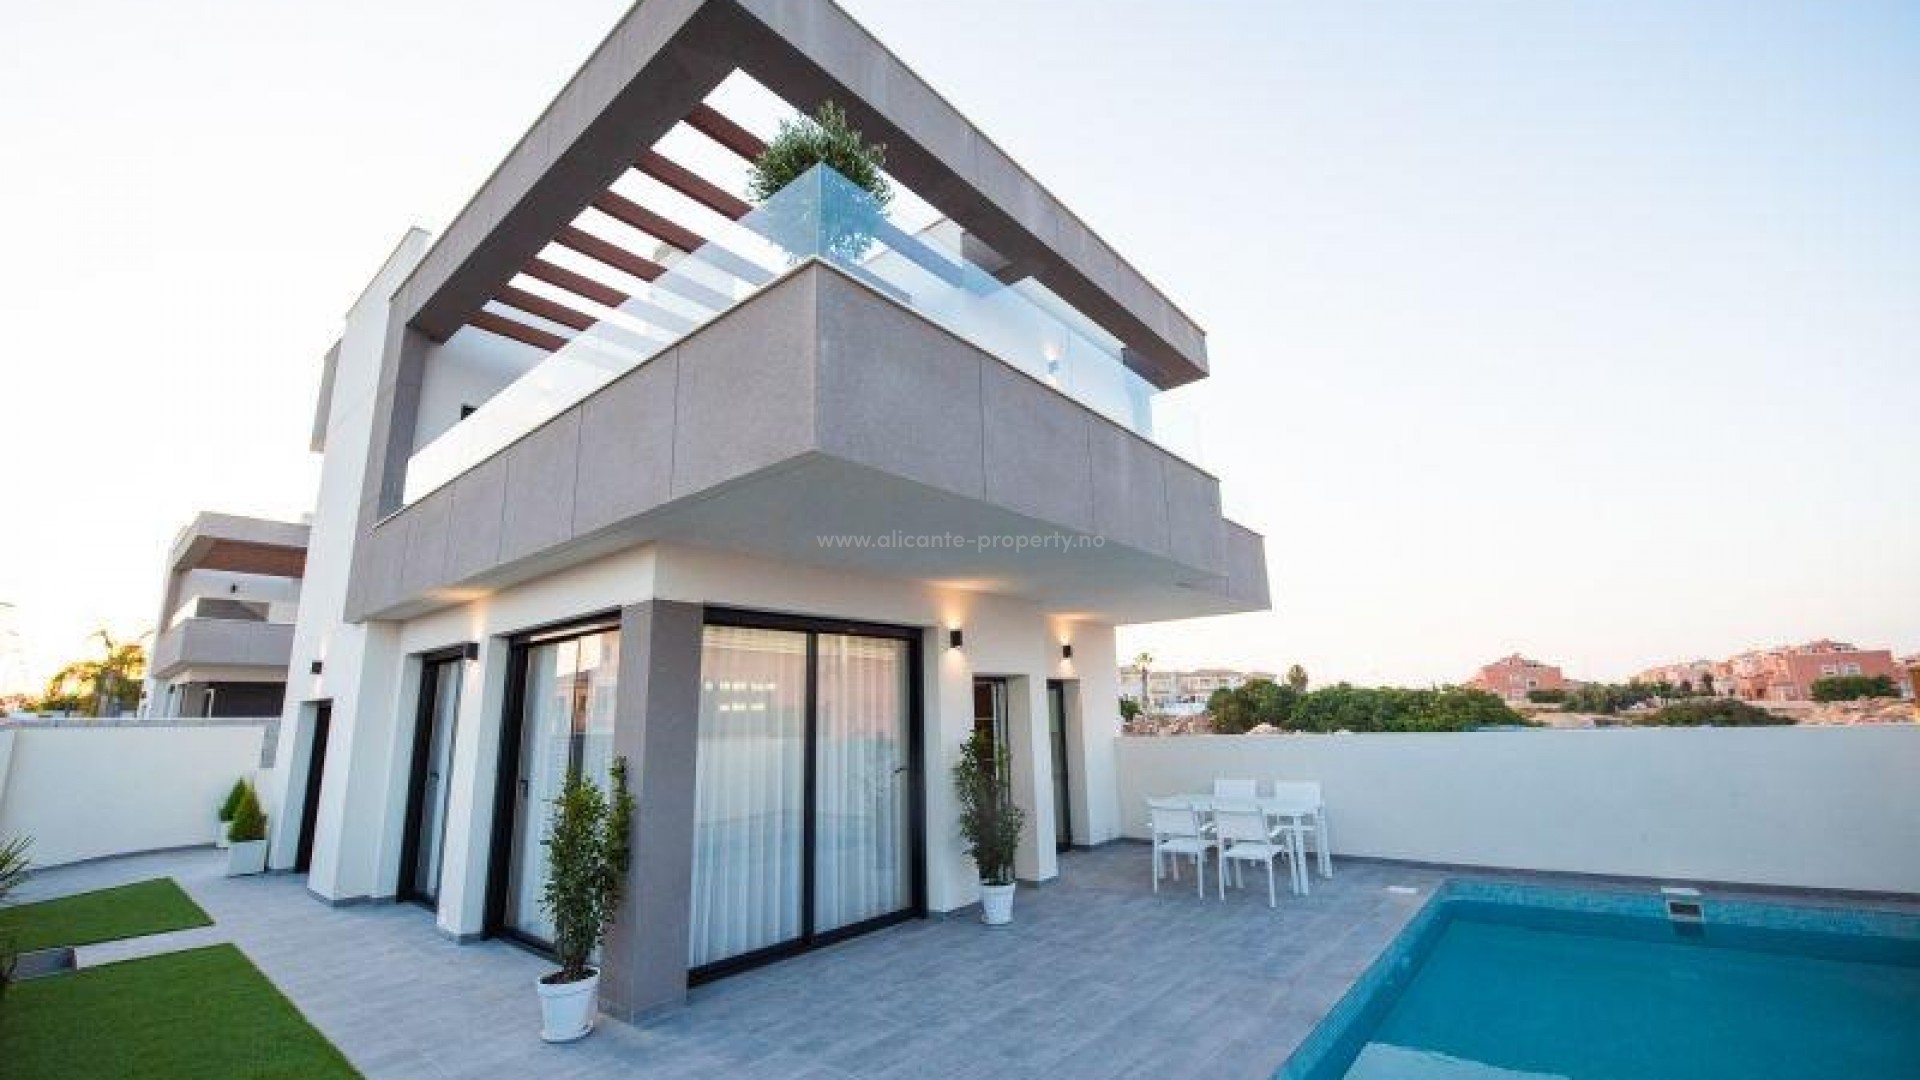 Properties in Los Montesinos, Alicante, 3 bedrooms, 2 bathrooms, 1 toilet, private pool, solarium, terrace. Close to Torrevieja, Guaradamar and golf courses